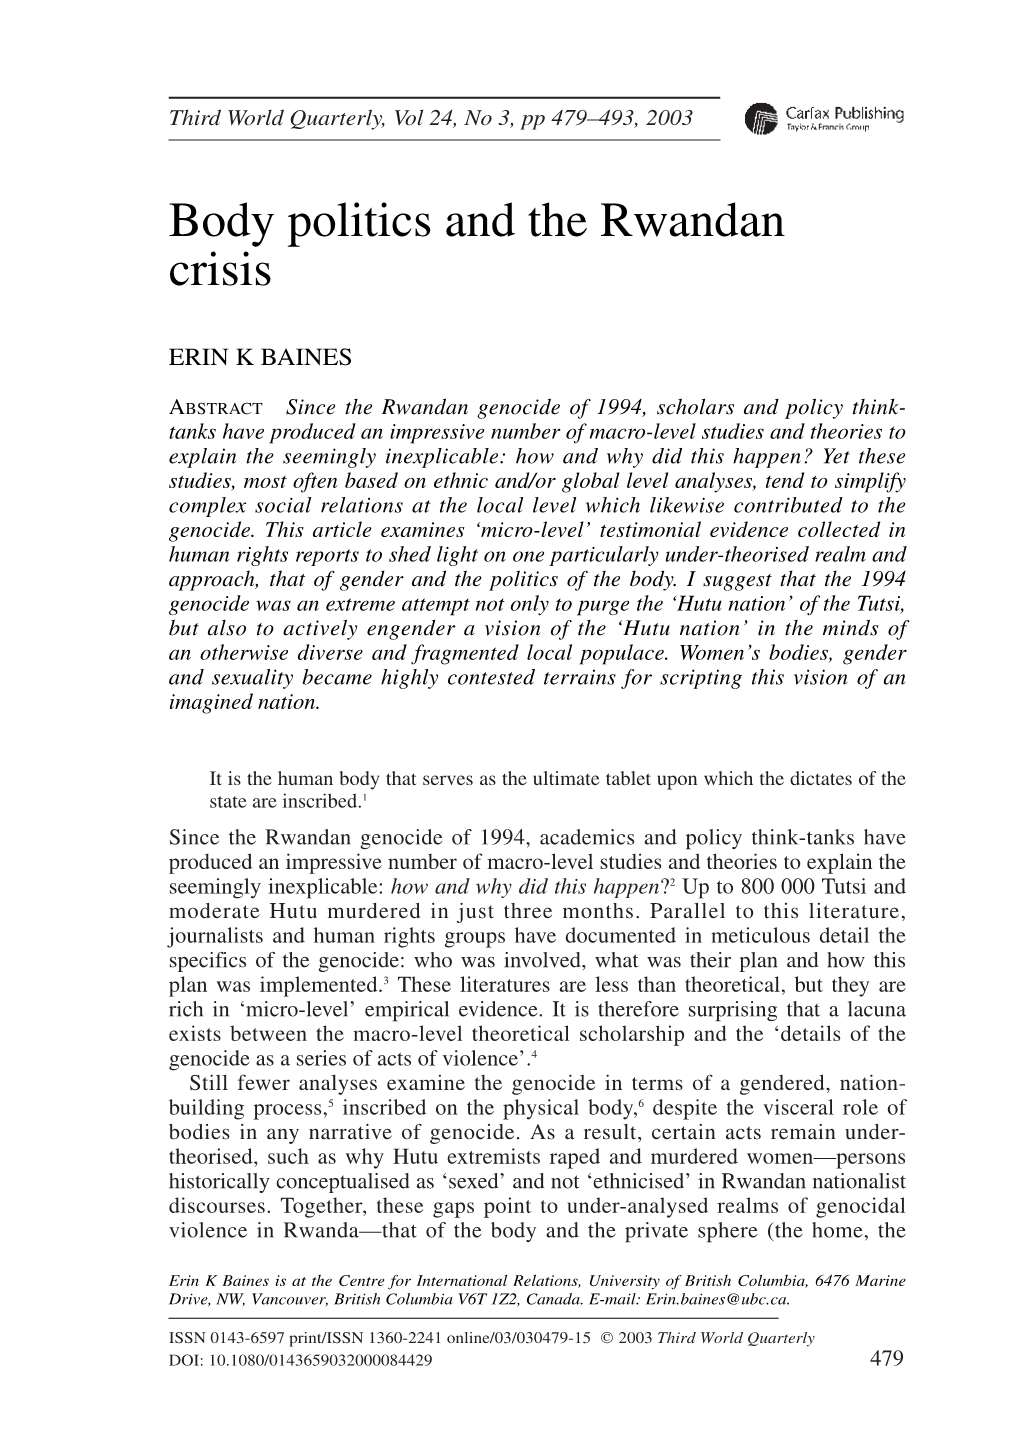 Body Politics and the Rwandan Crisis